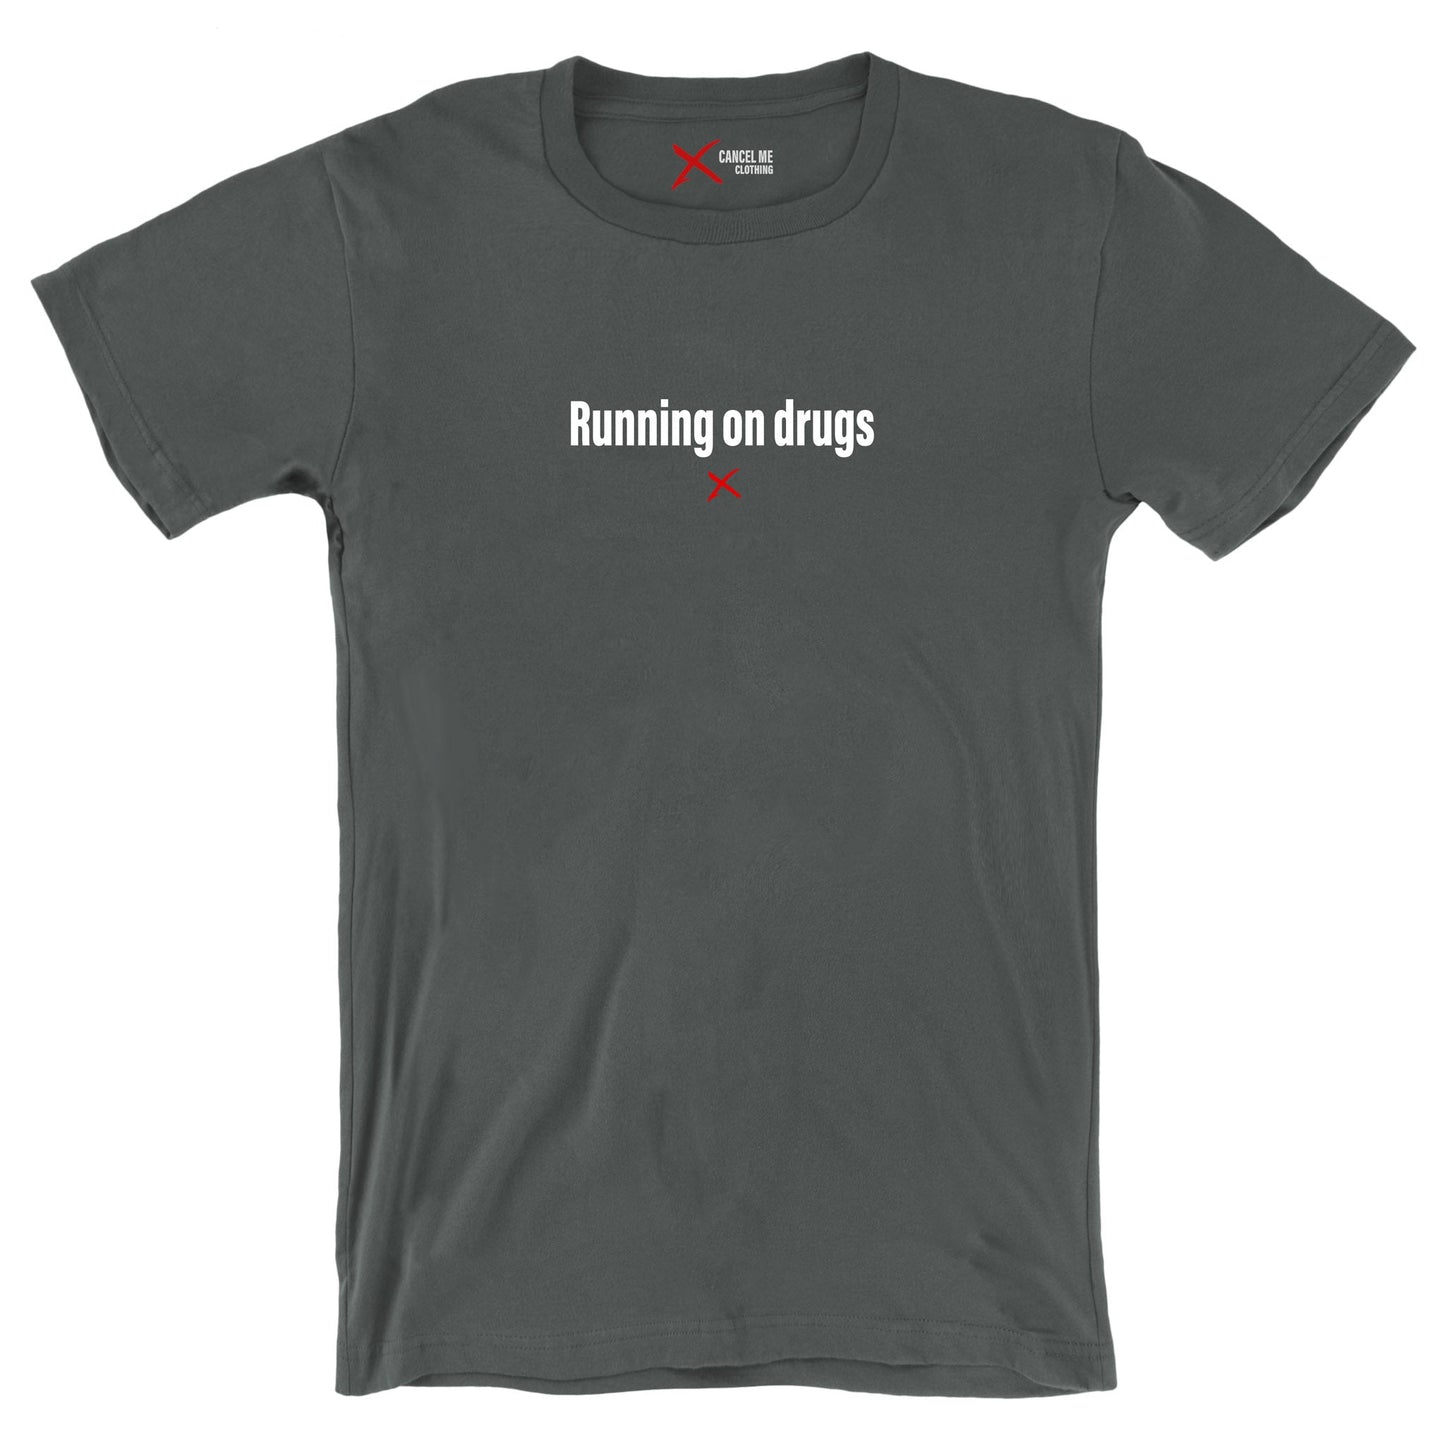 Running on drugs - Shirt